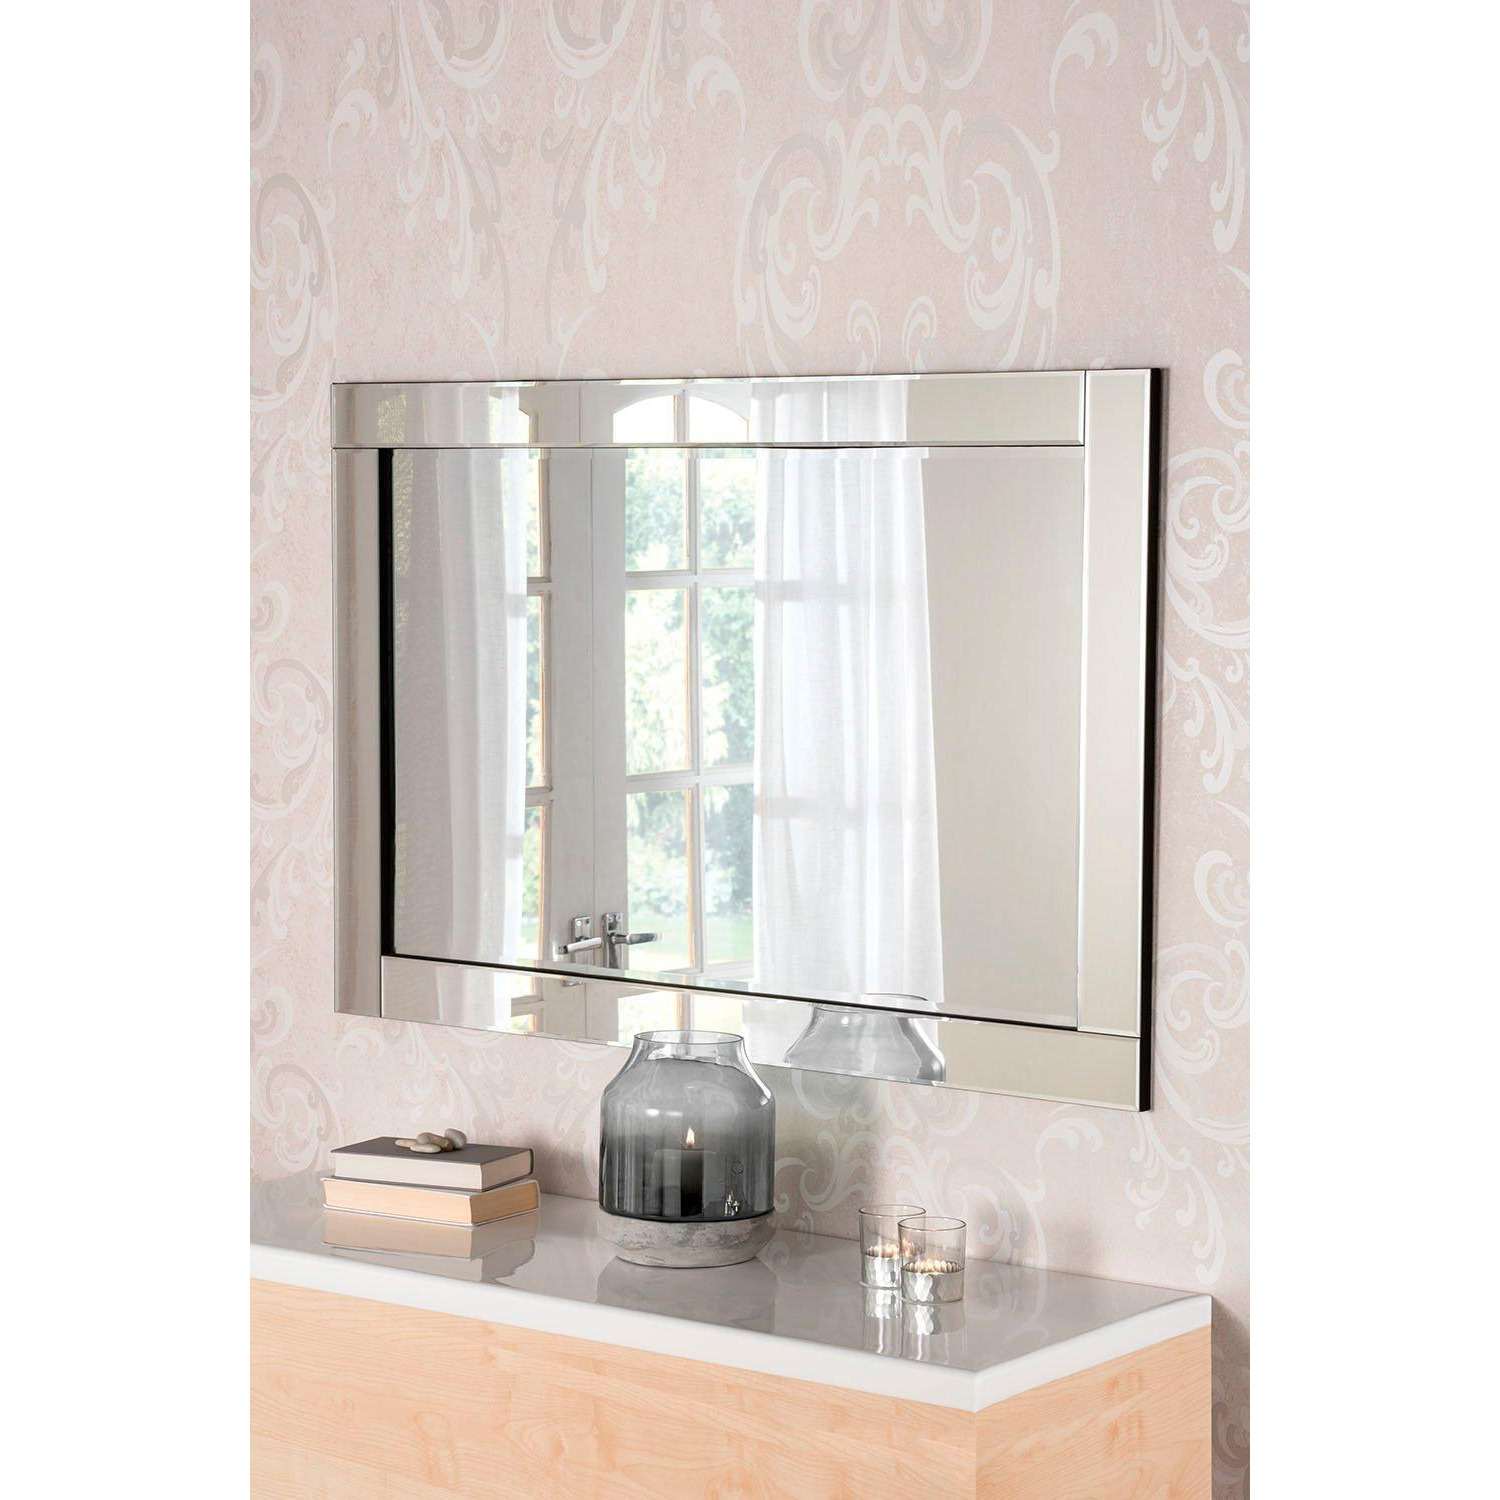 Simple Contemporary Wall Mirror 53x43cm - image 1